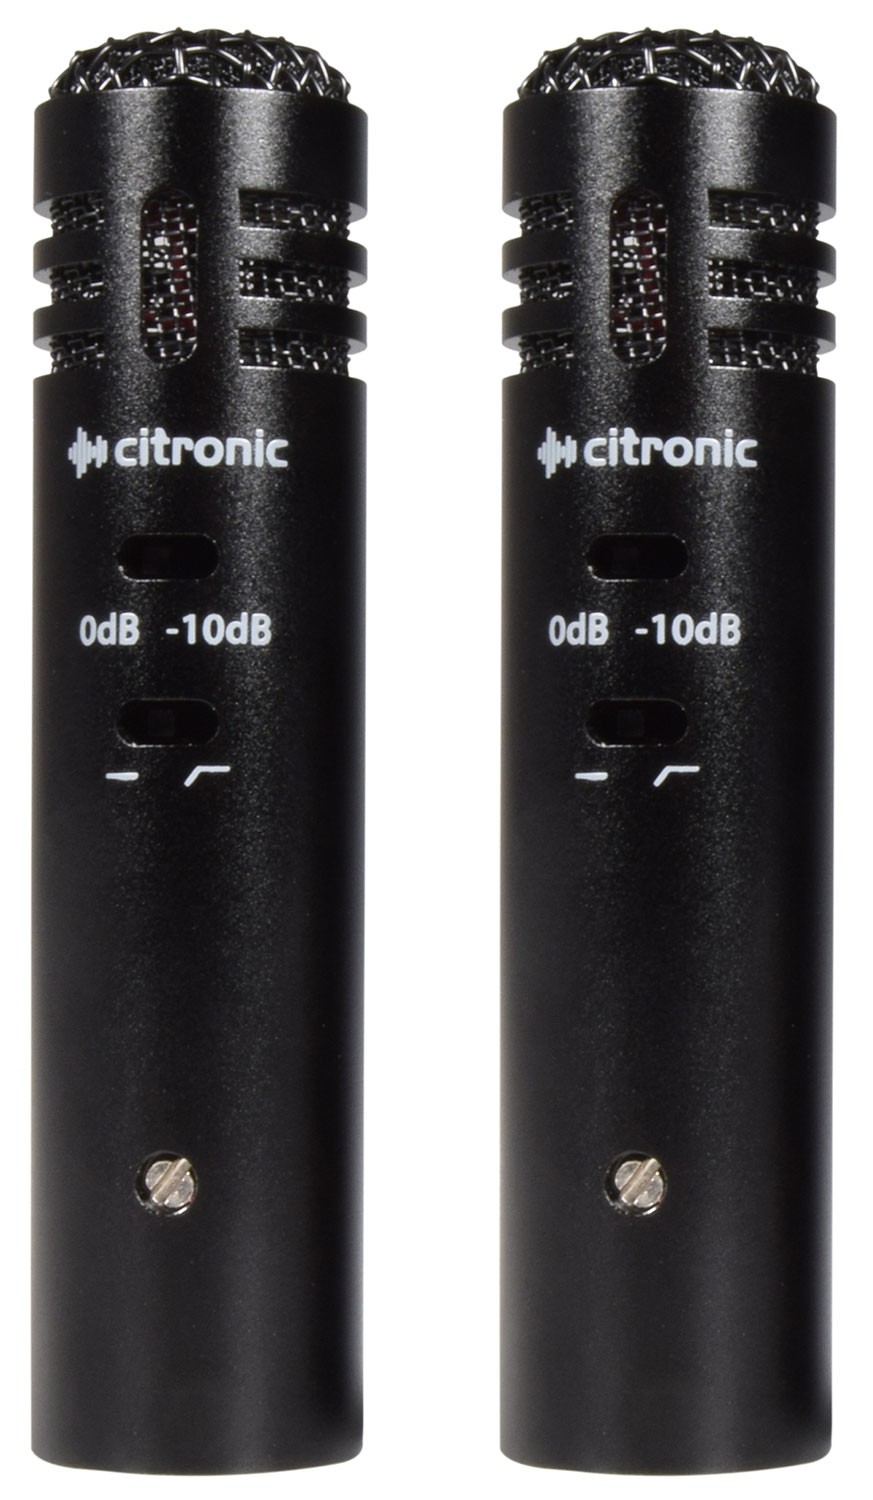 Citronic EC20 Condenser Mics Stereo - Pair